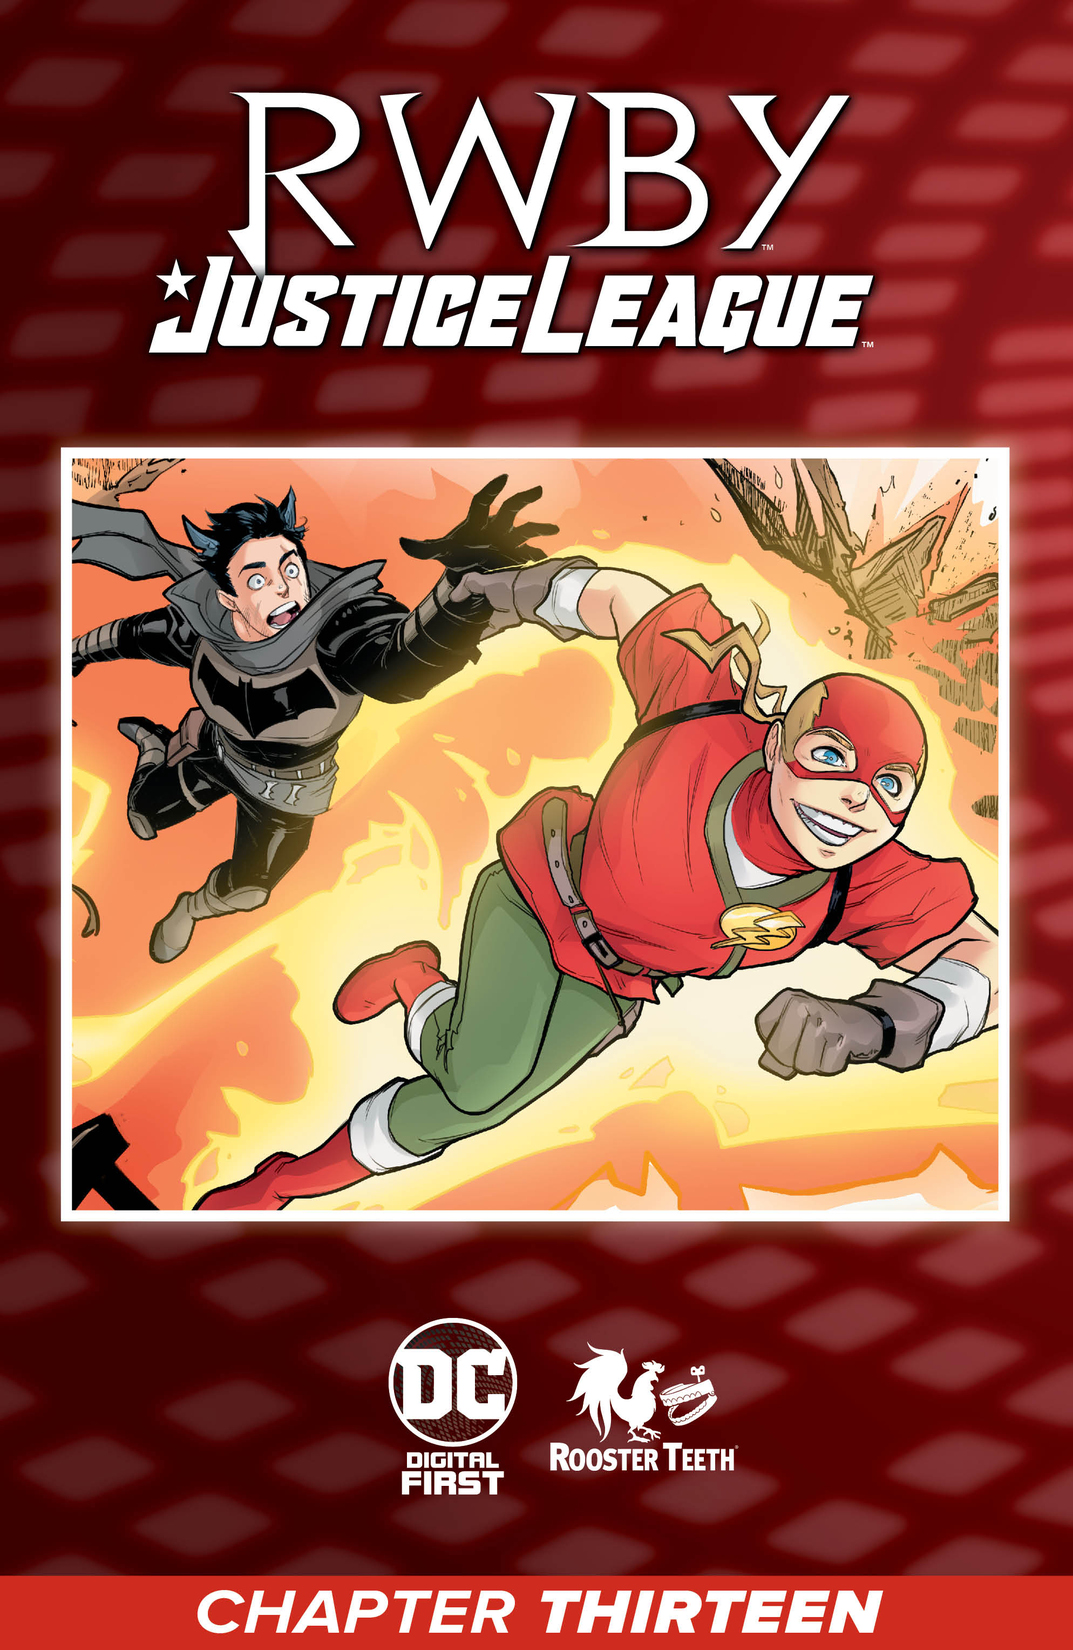 RWBY/Justice League #13 preview images